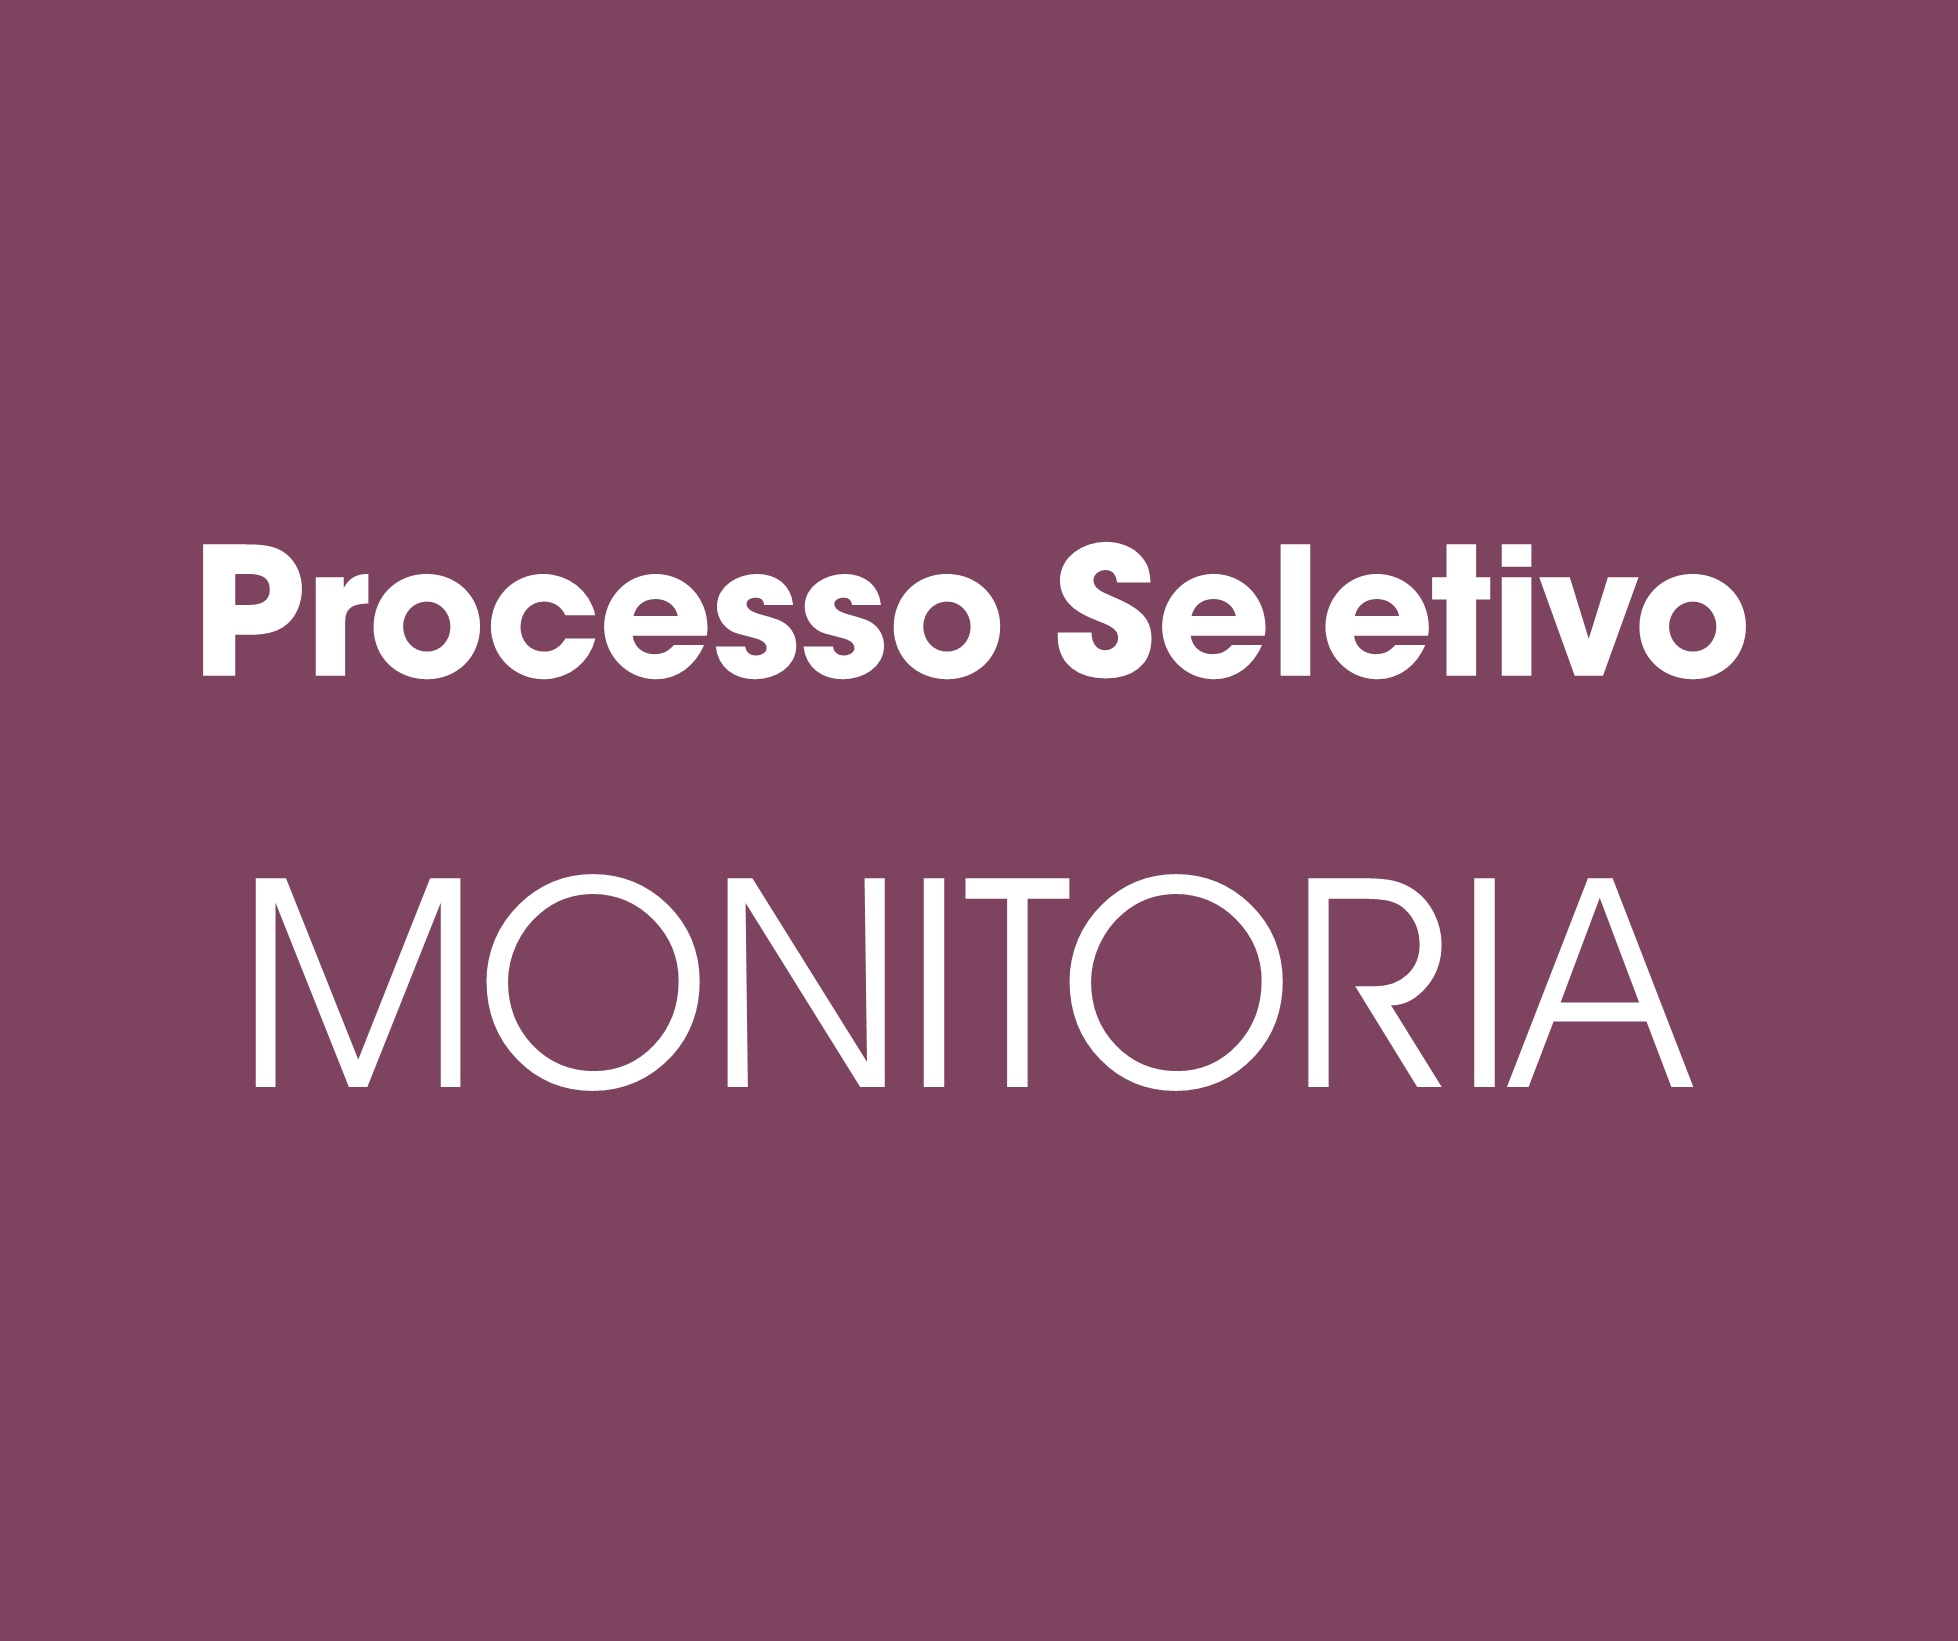 You are currently viewing Resultado – Processo seletivo Monitoria